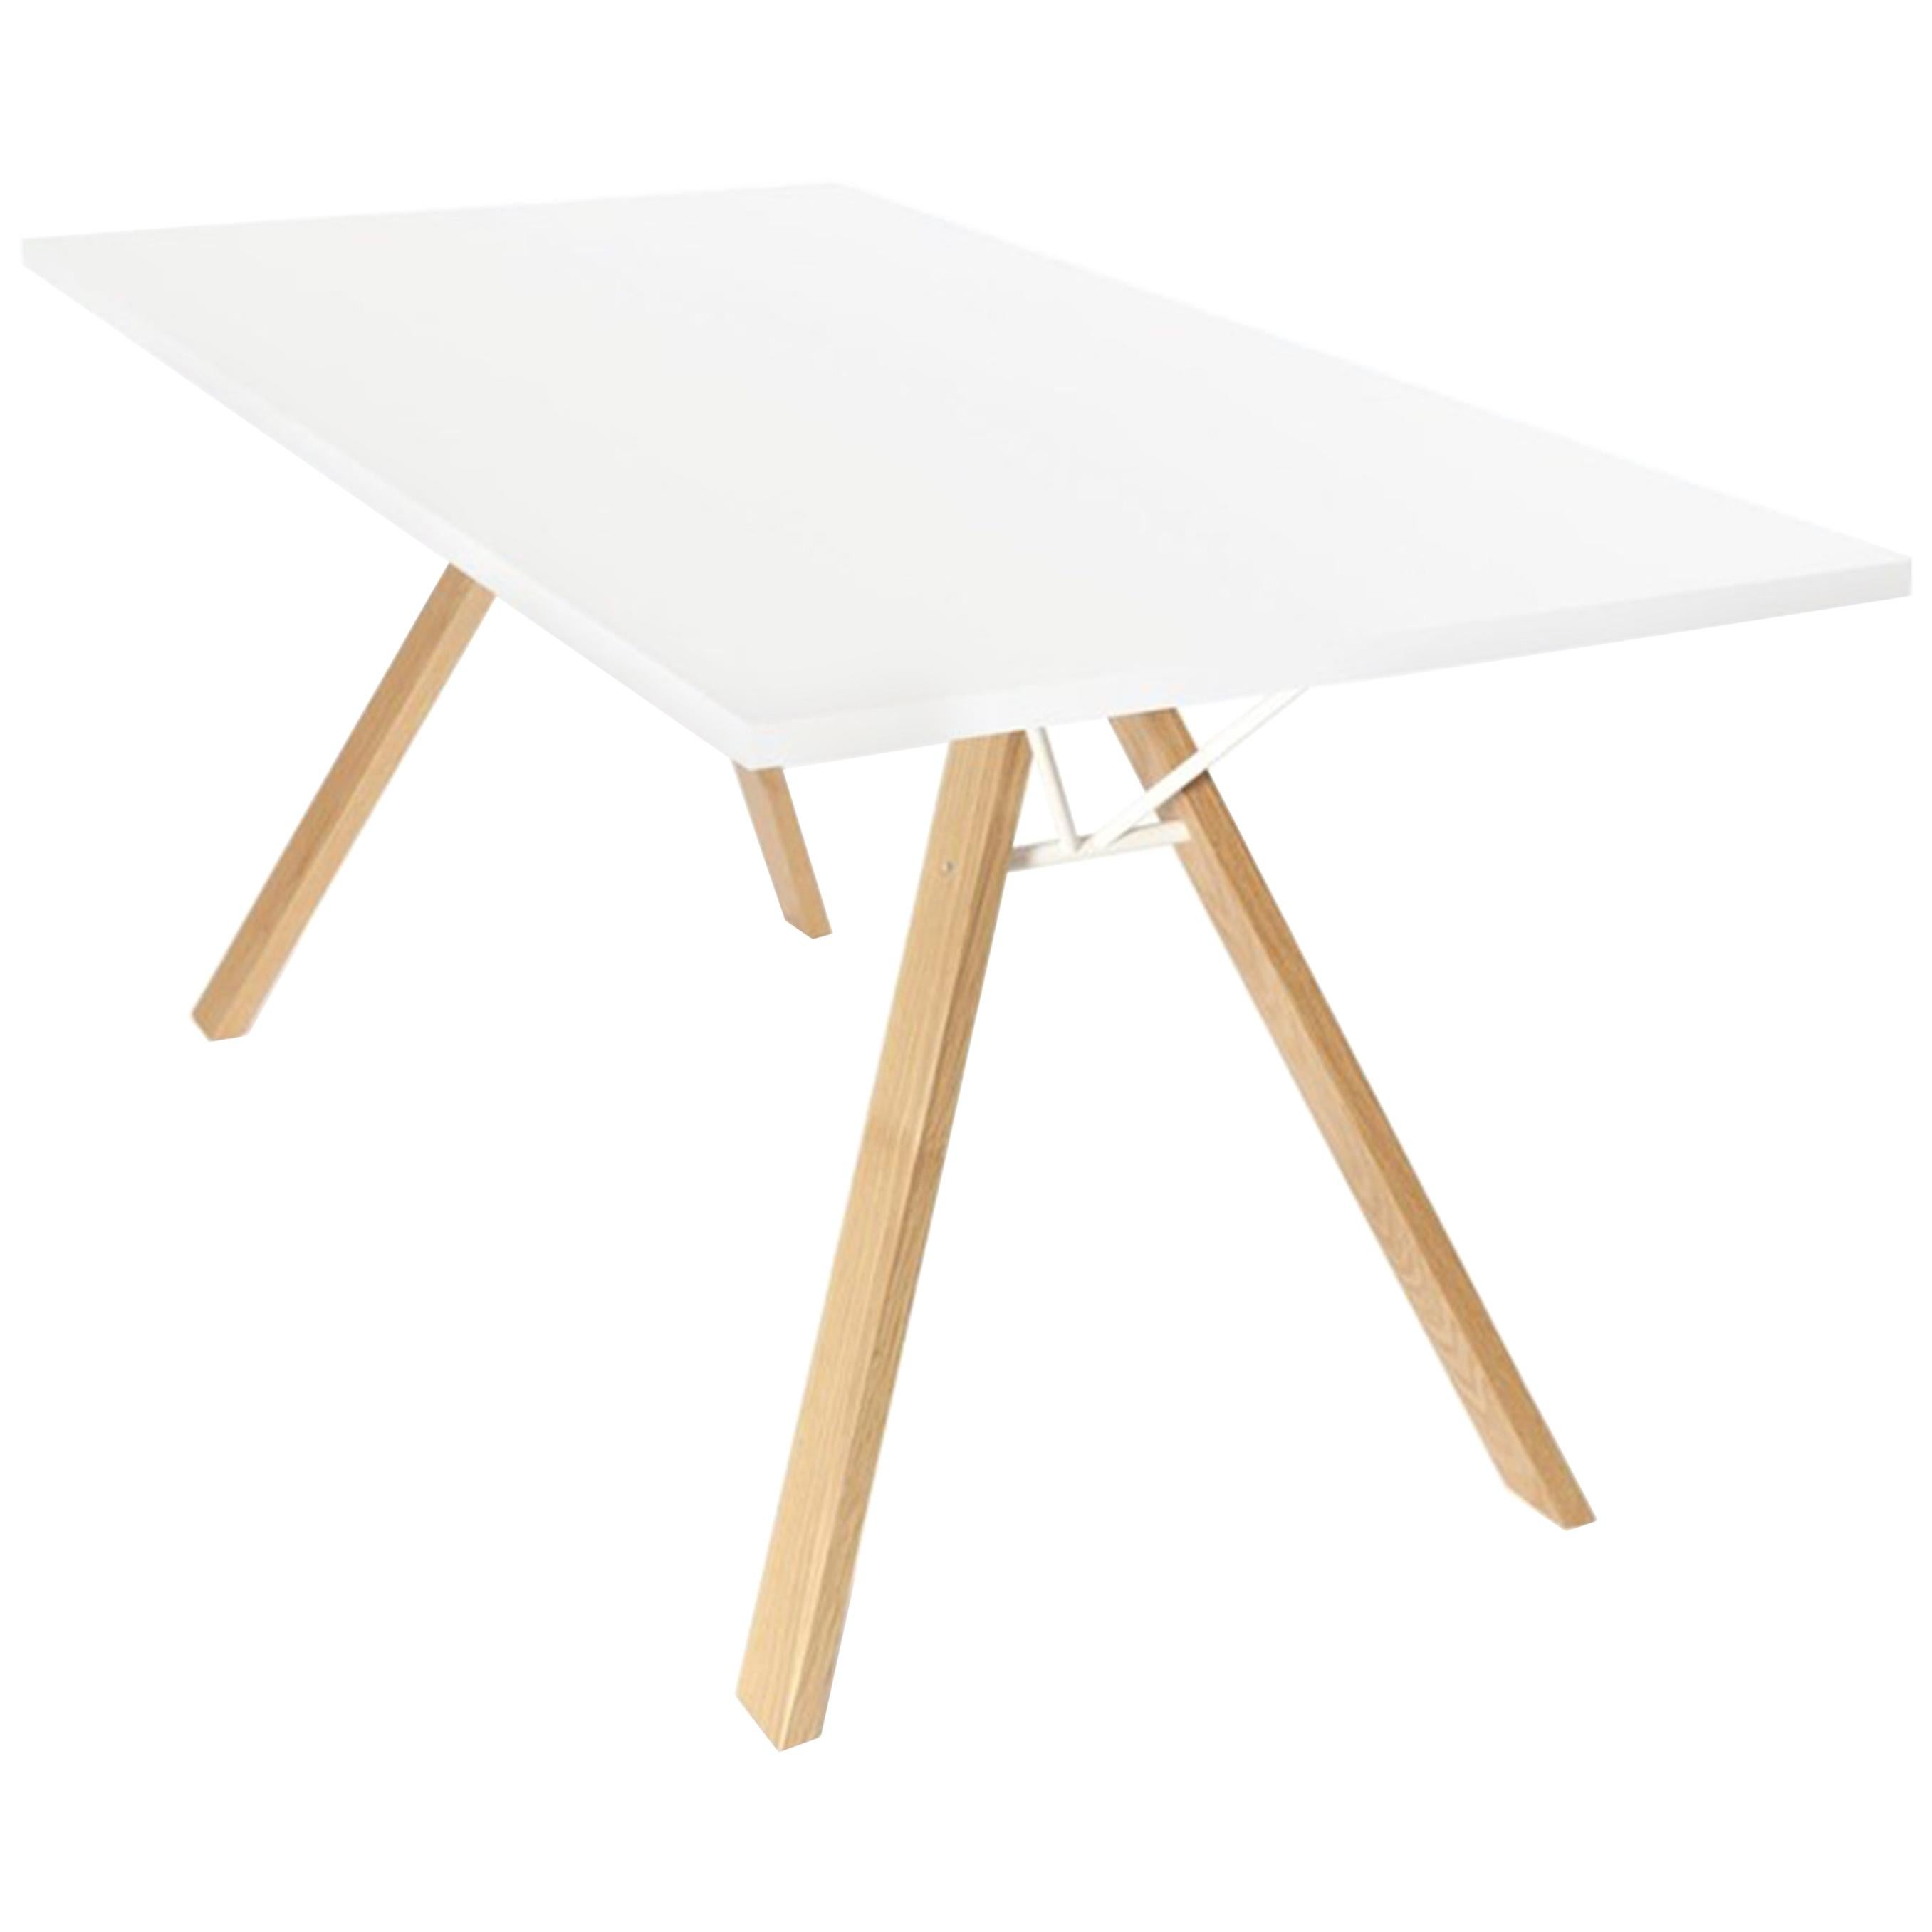 Inno Lab Table Designed by Harri Korhonen